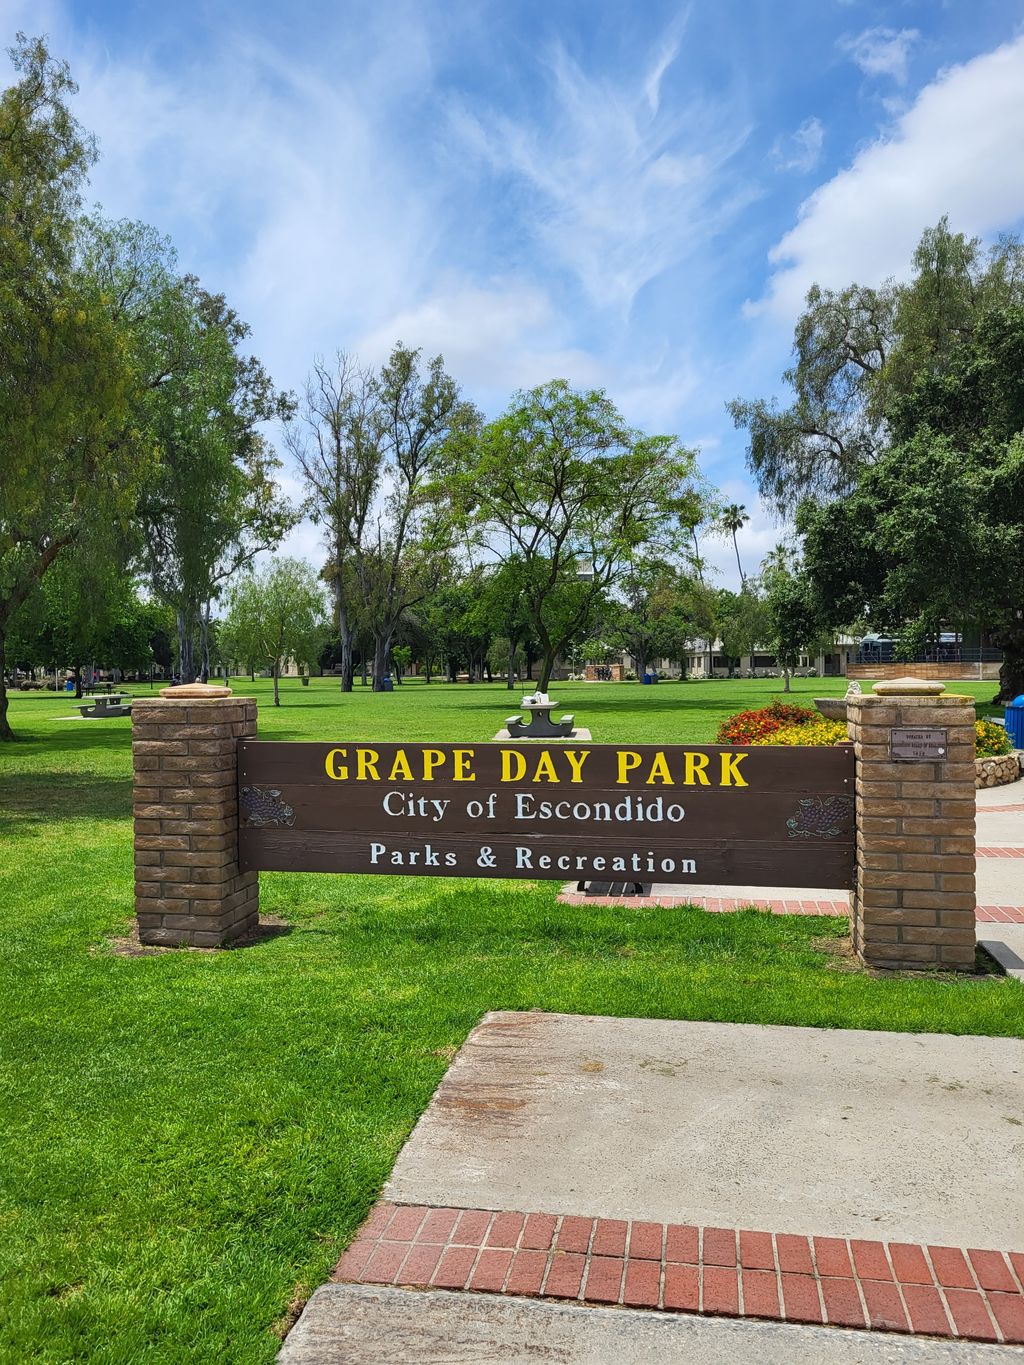 Grape Day Park